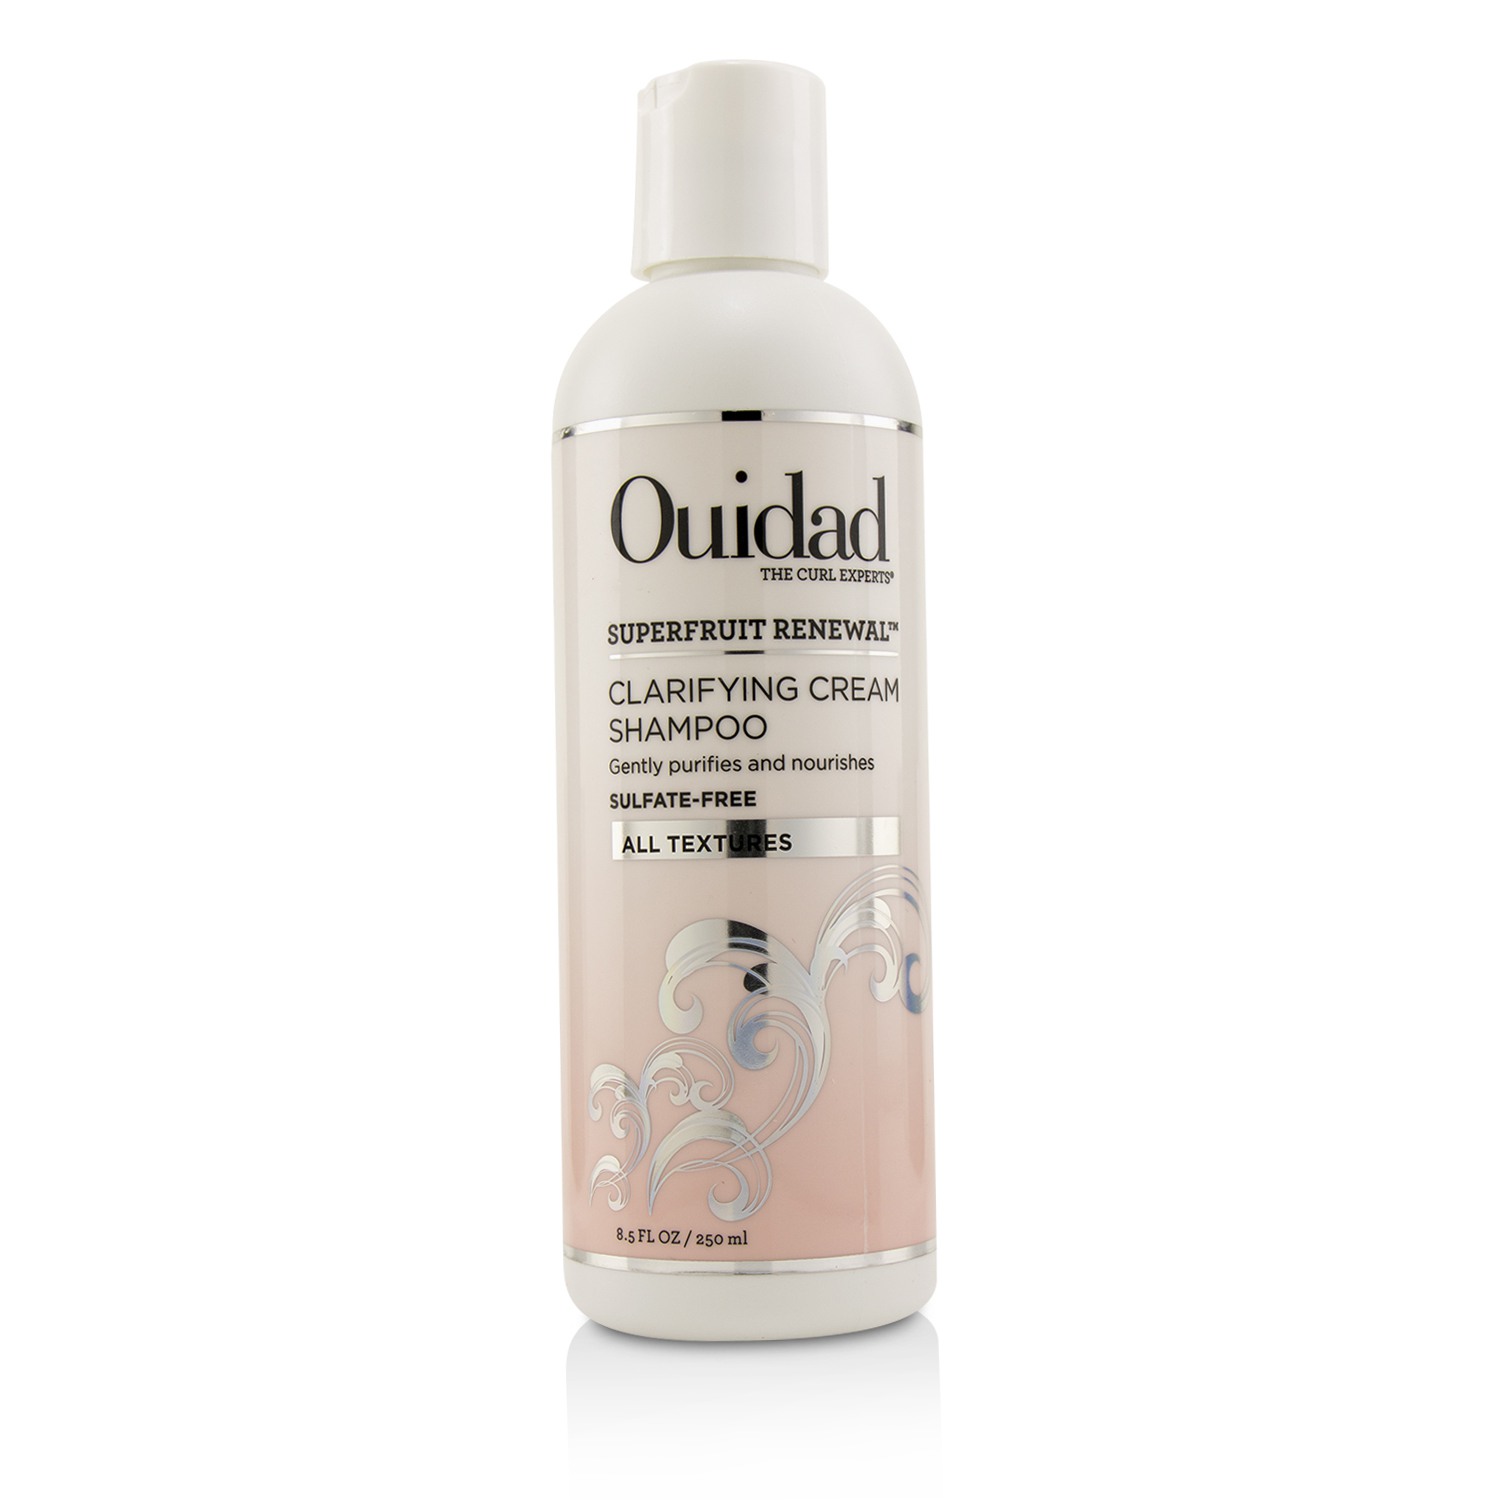 Superfruit Renewal Clarifying Cream Shampoo (All Textures) Ouidad Image